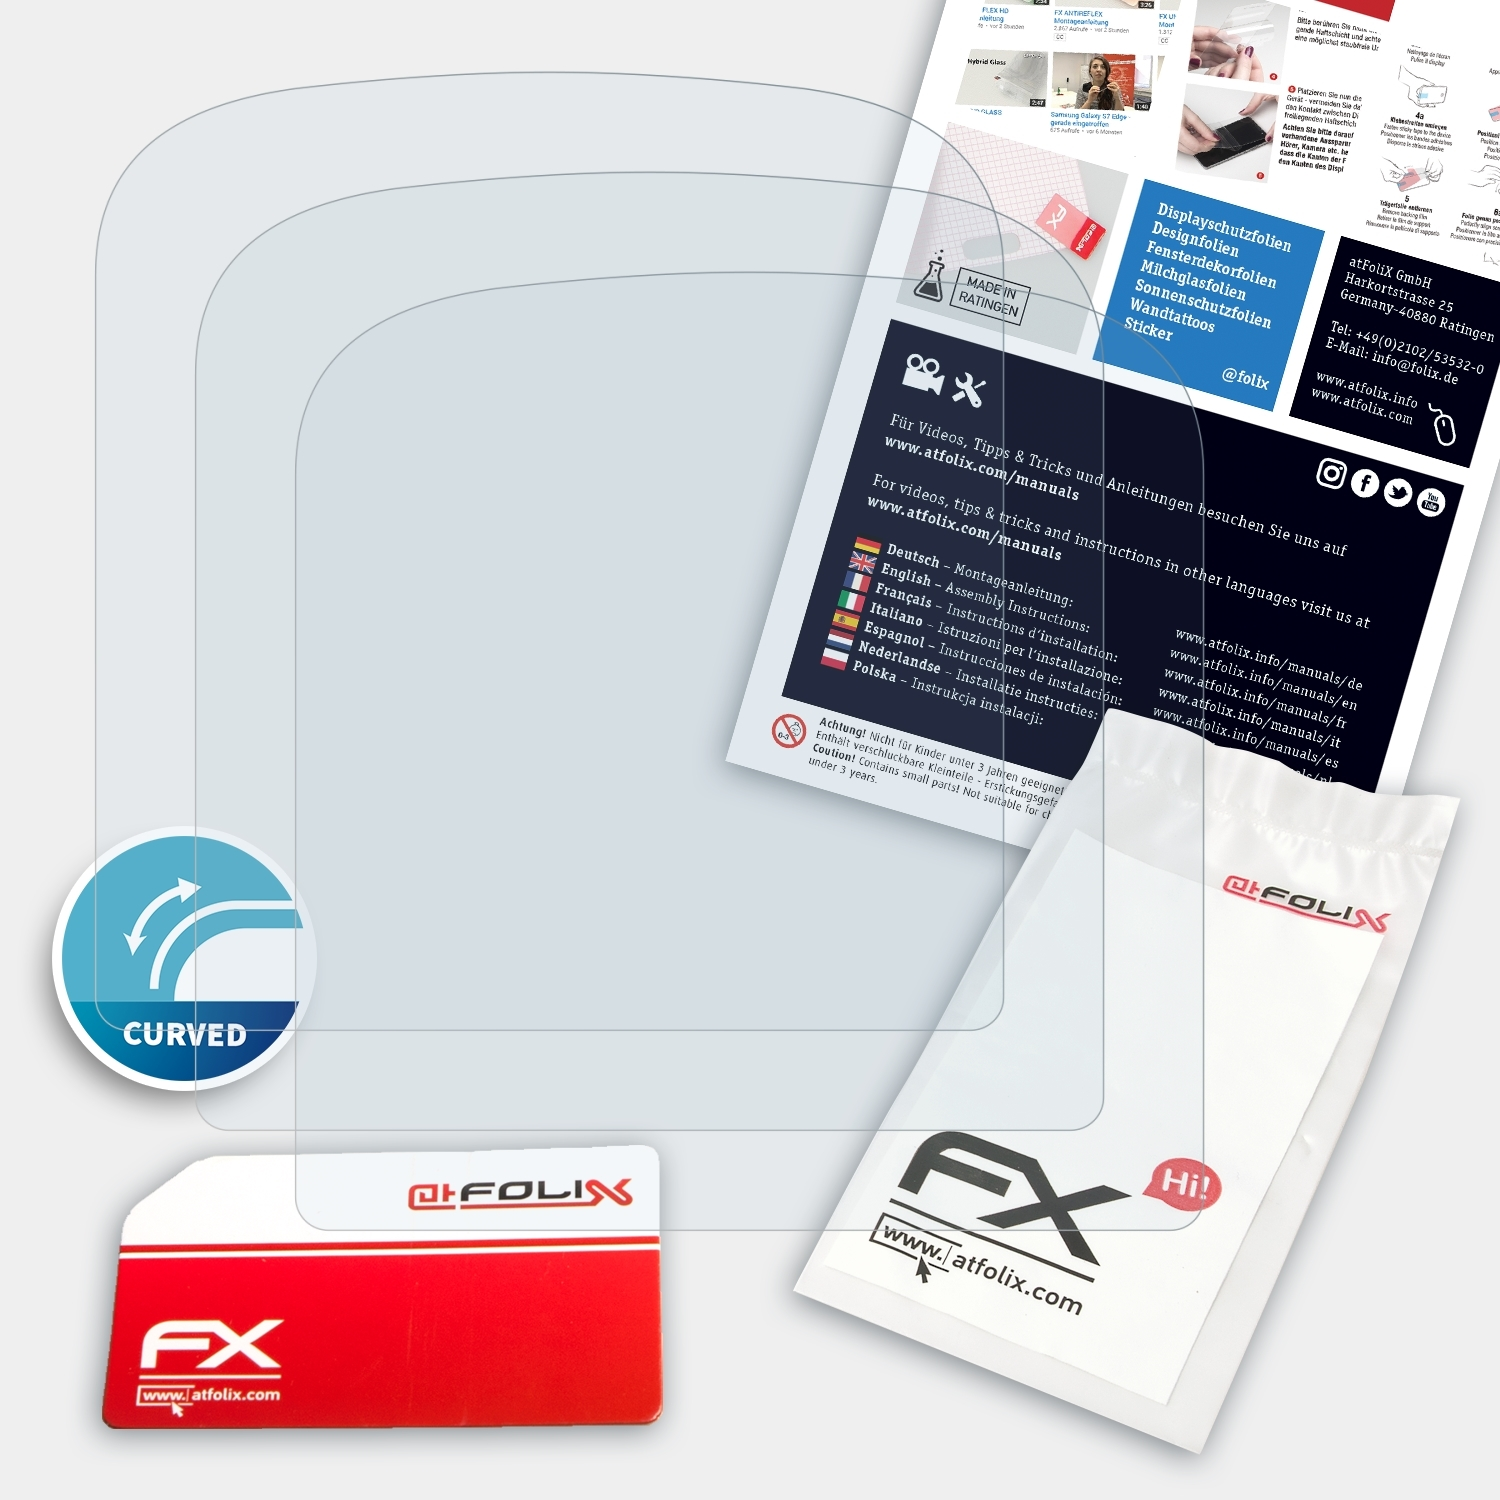 FX-ActiFleX Vivofit Displayschutz(für 4) ATFOLIX 3x Garmin